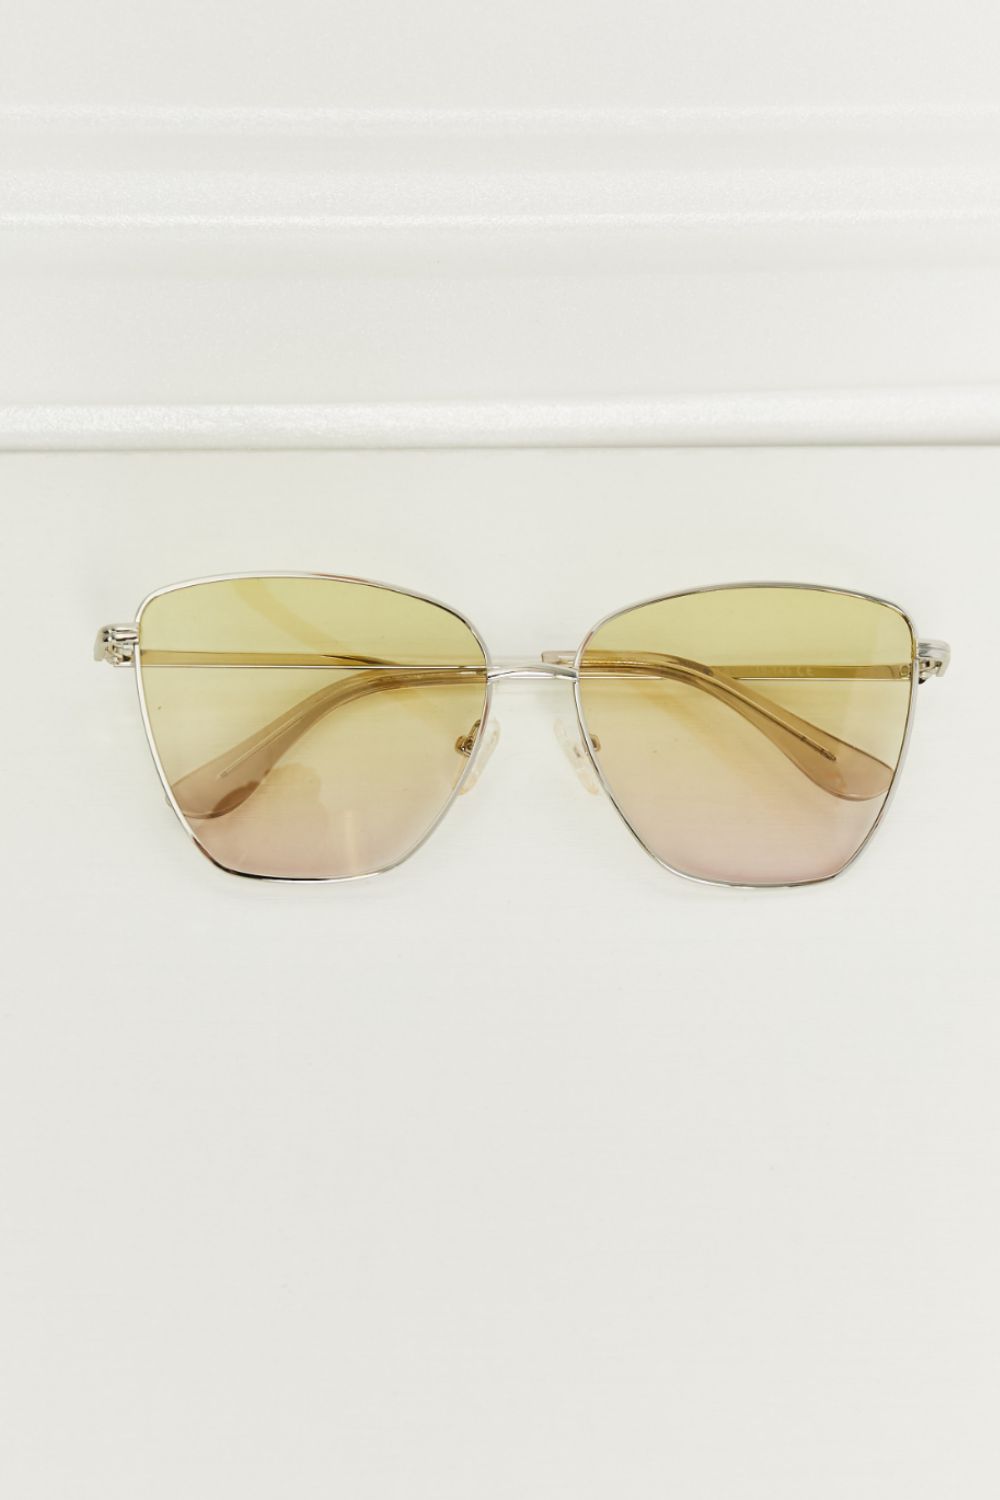 Metal Frame Full Rim Sunglasses Lemon One Size Sunglasses by Vim&Vigor | Vim&Vigor Boutique